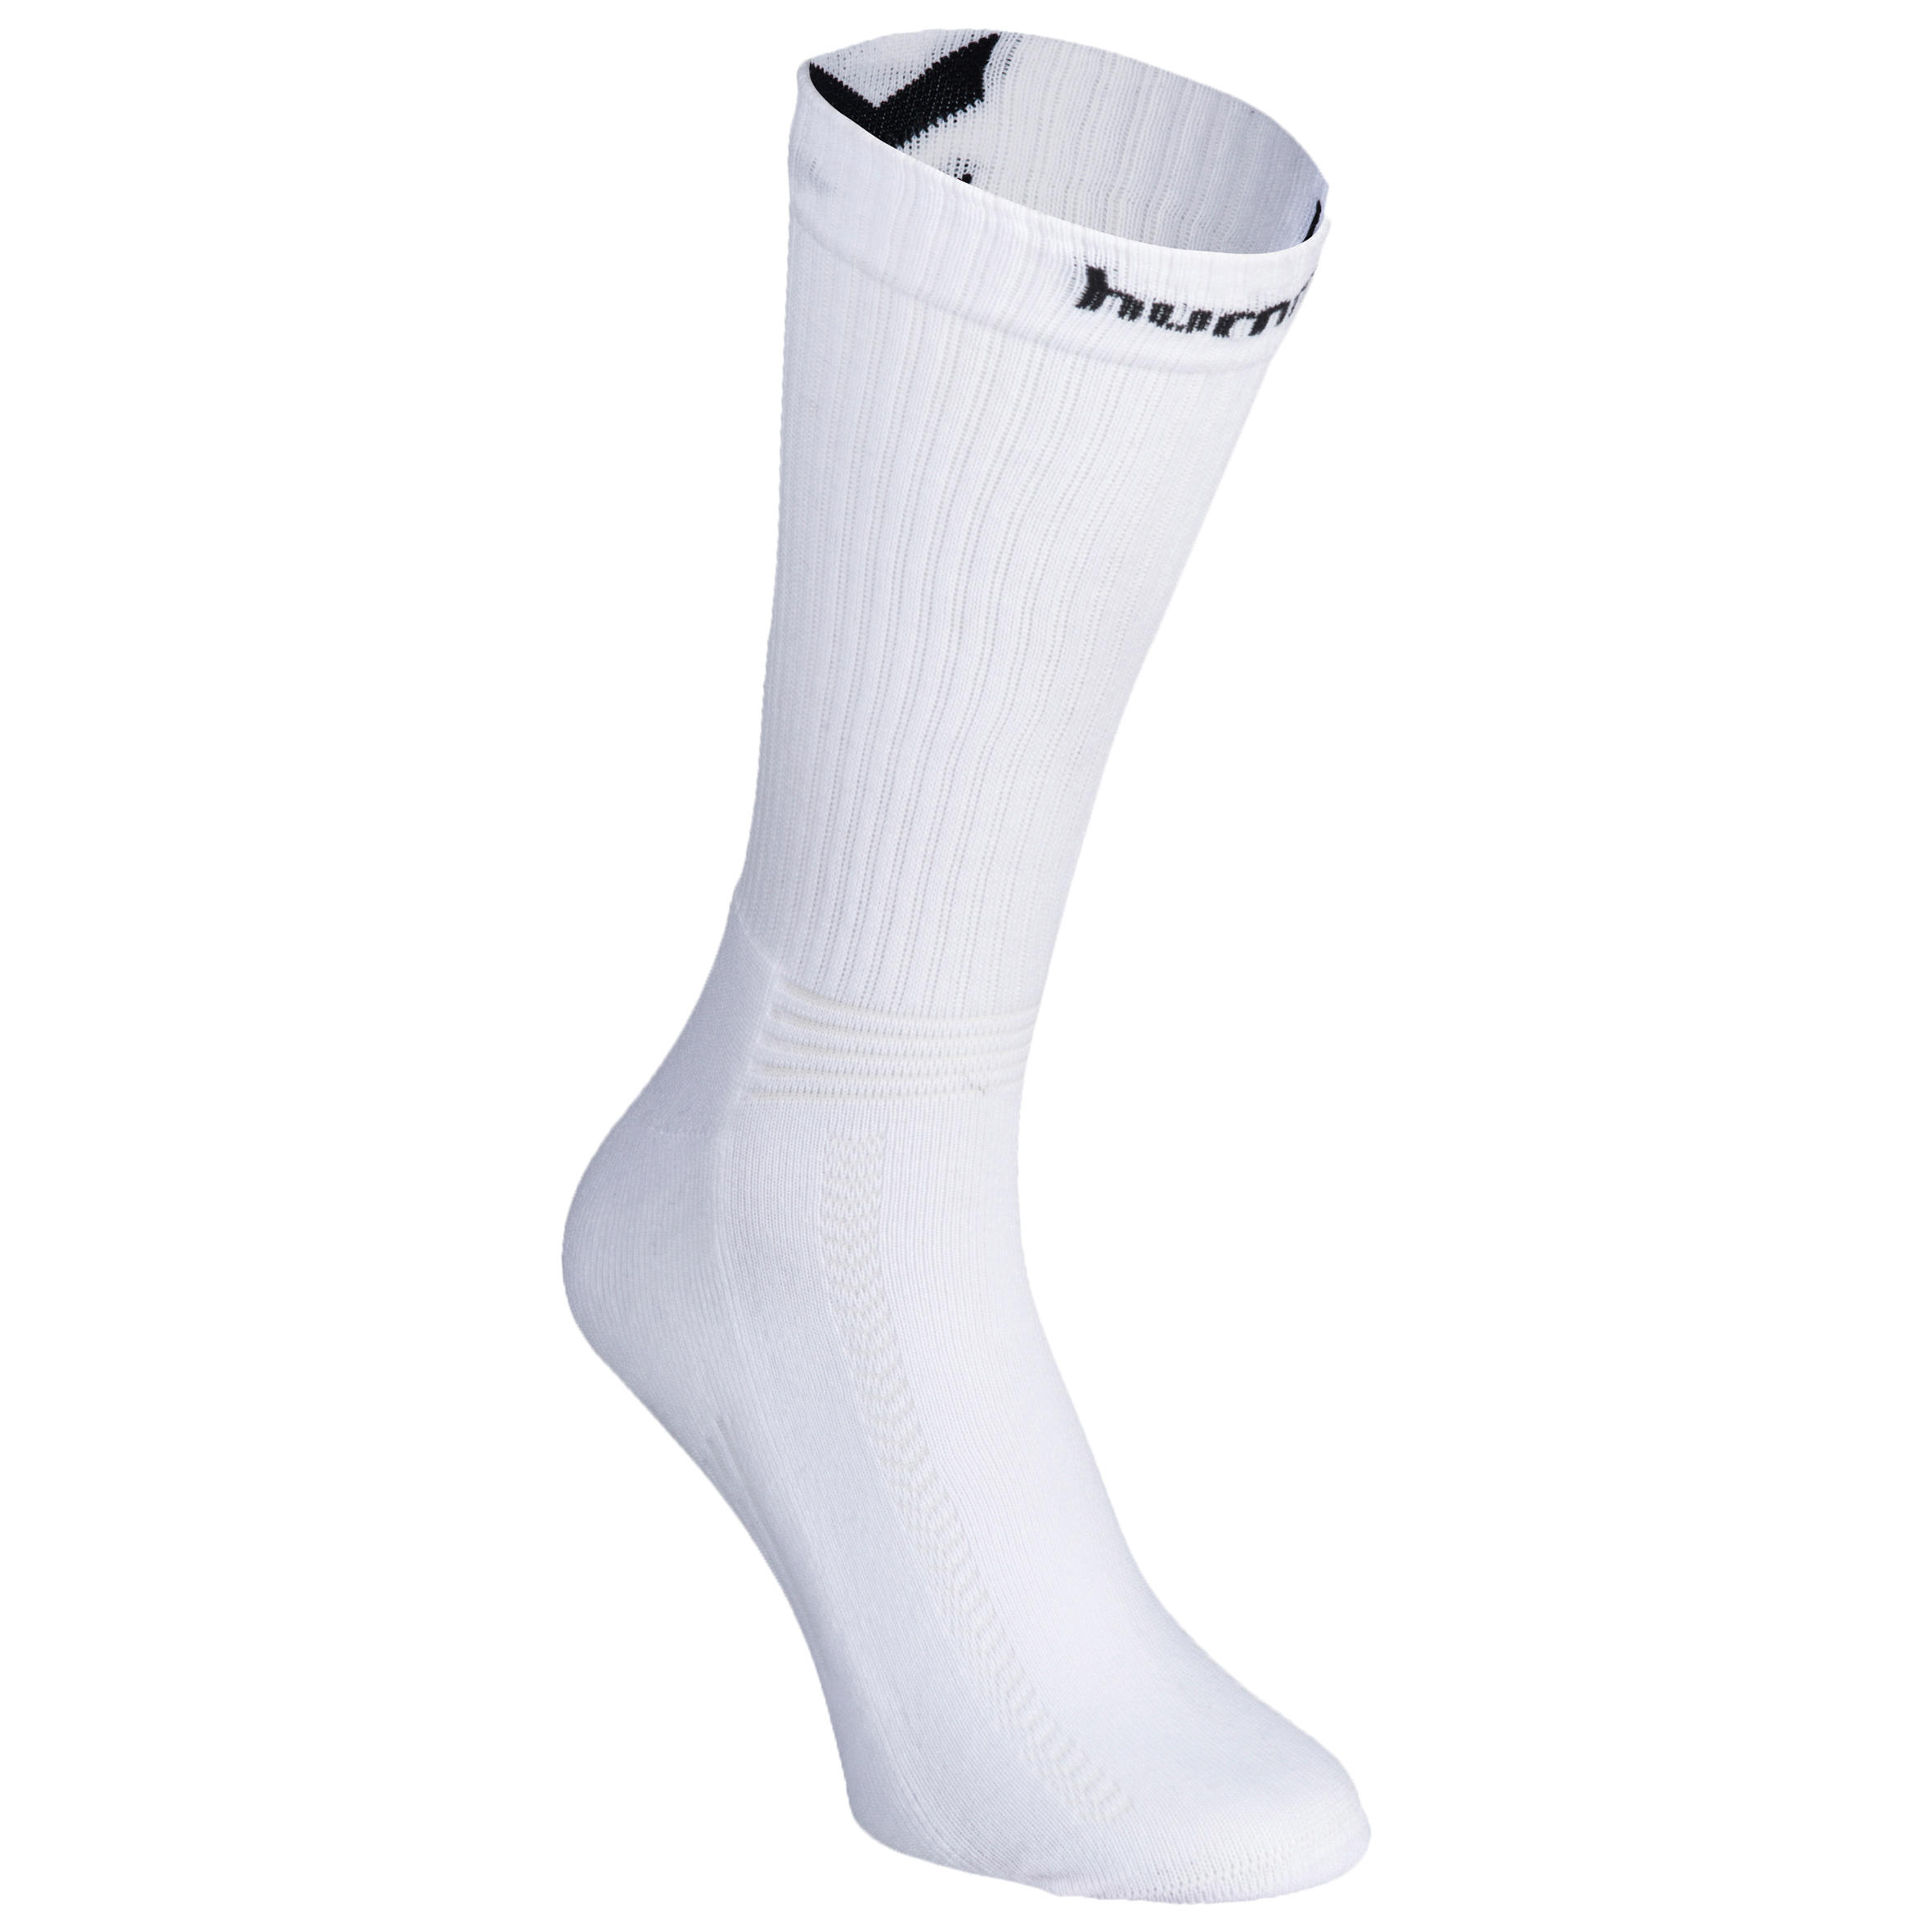 Adult Handball Socks - White/Black 2/4